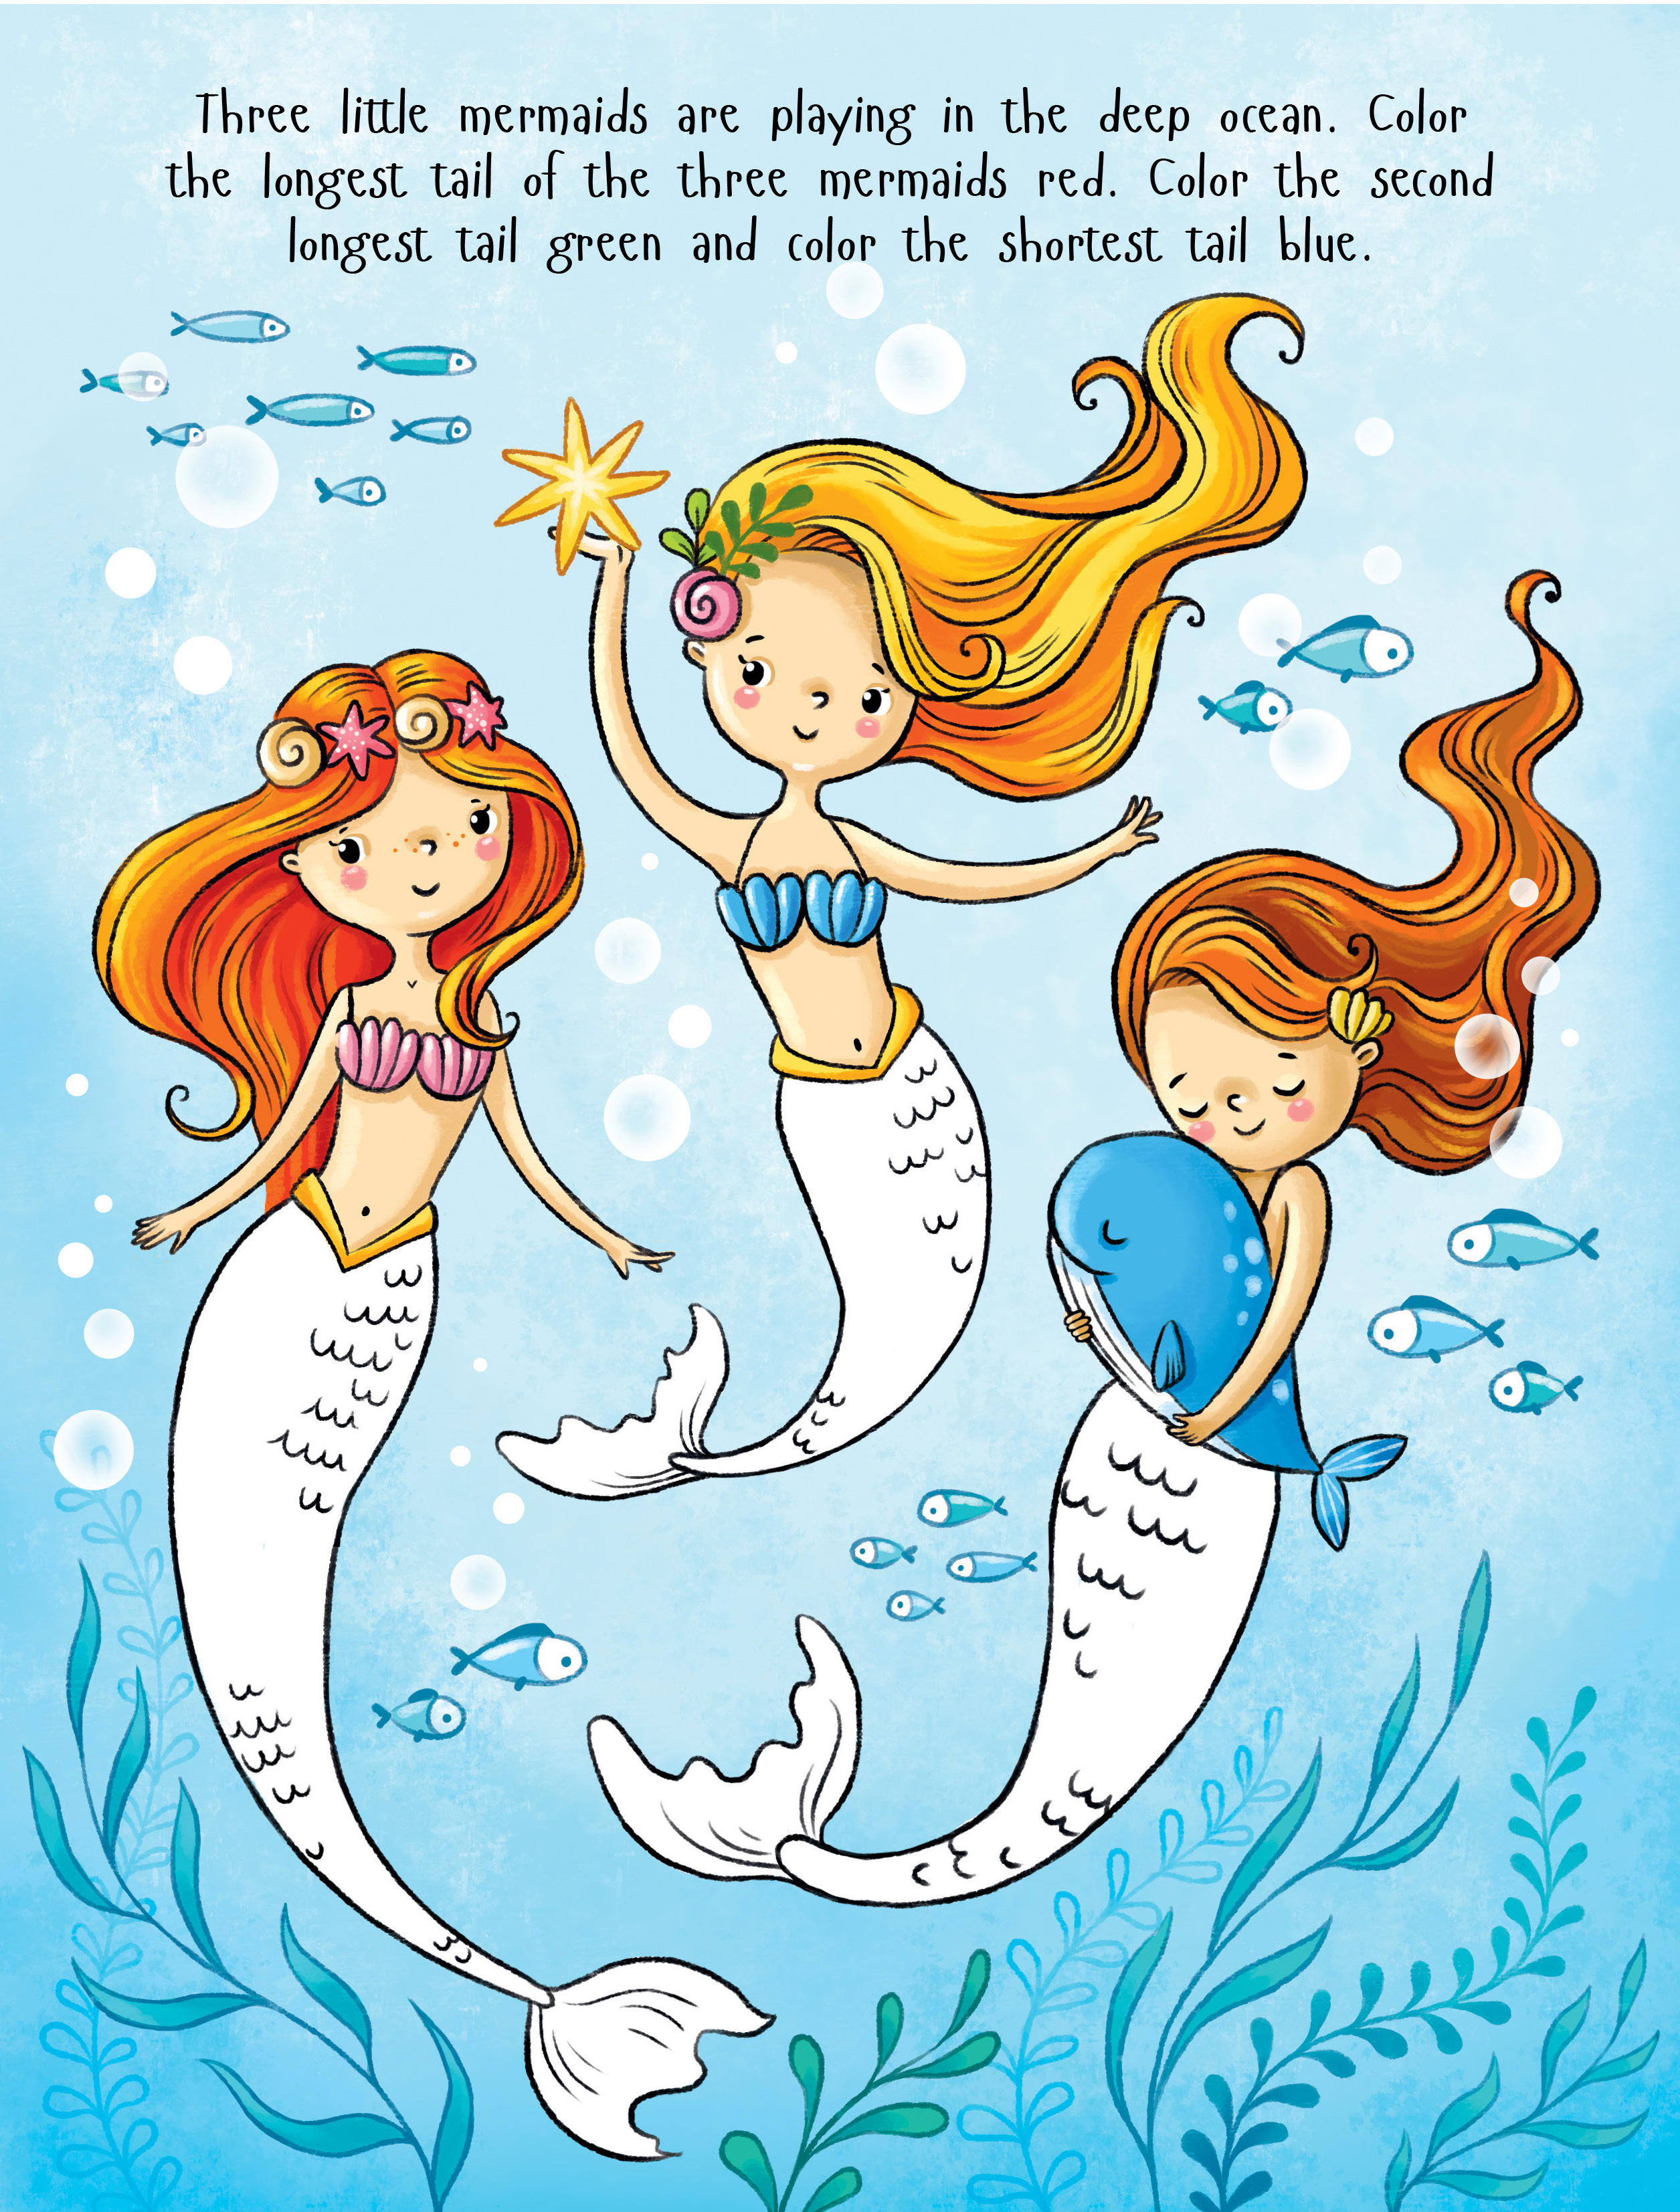 Princesses, Mermaids & Unicorns Activity Book